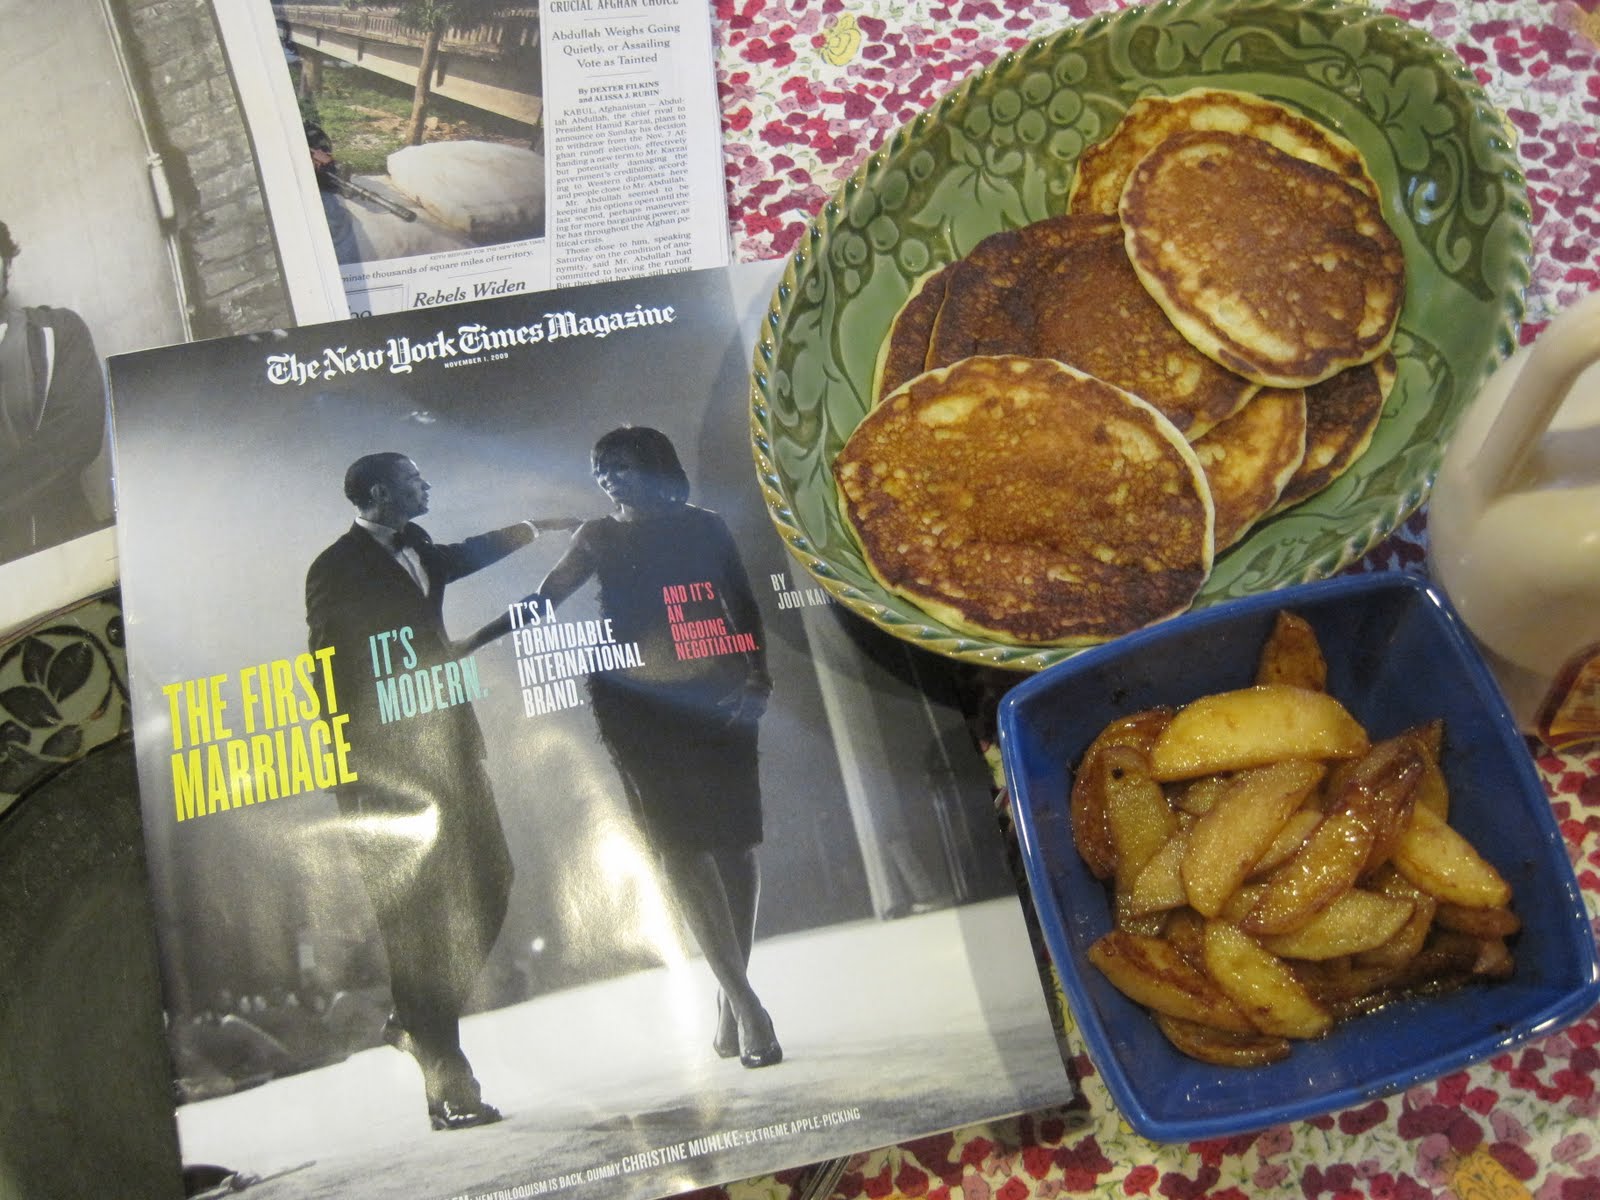 [pancakes.JPG]